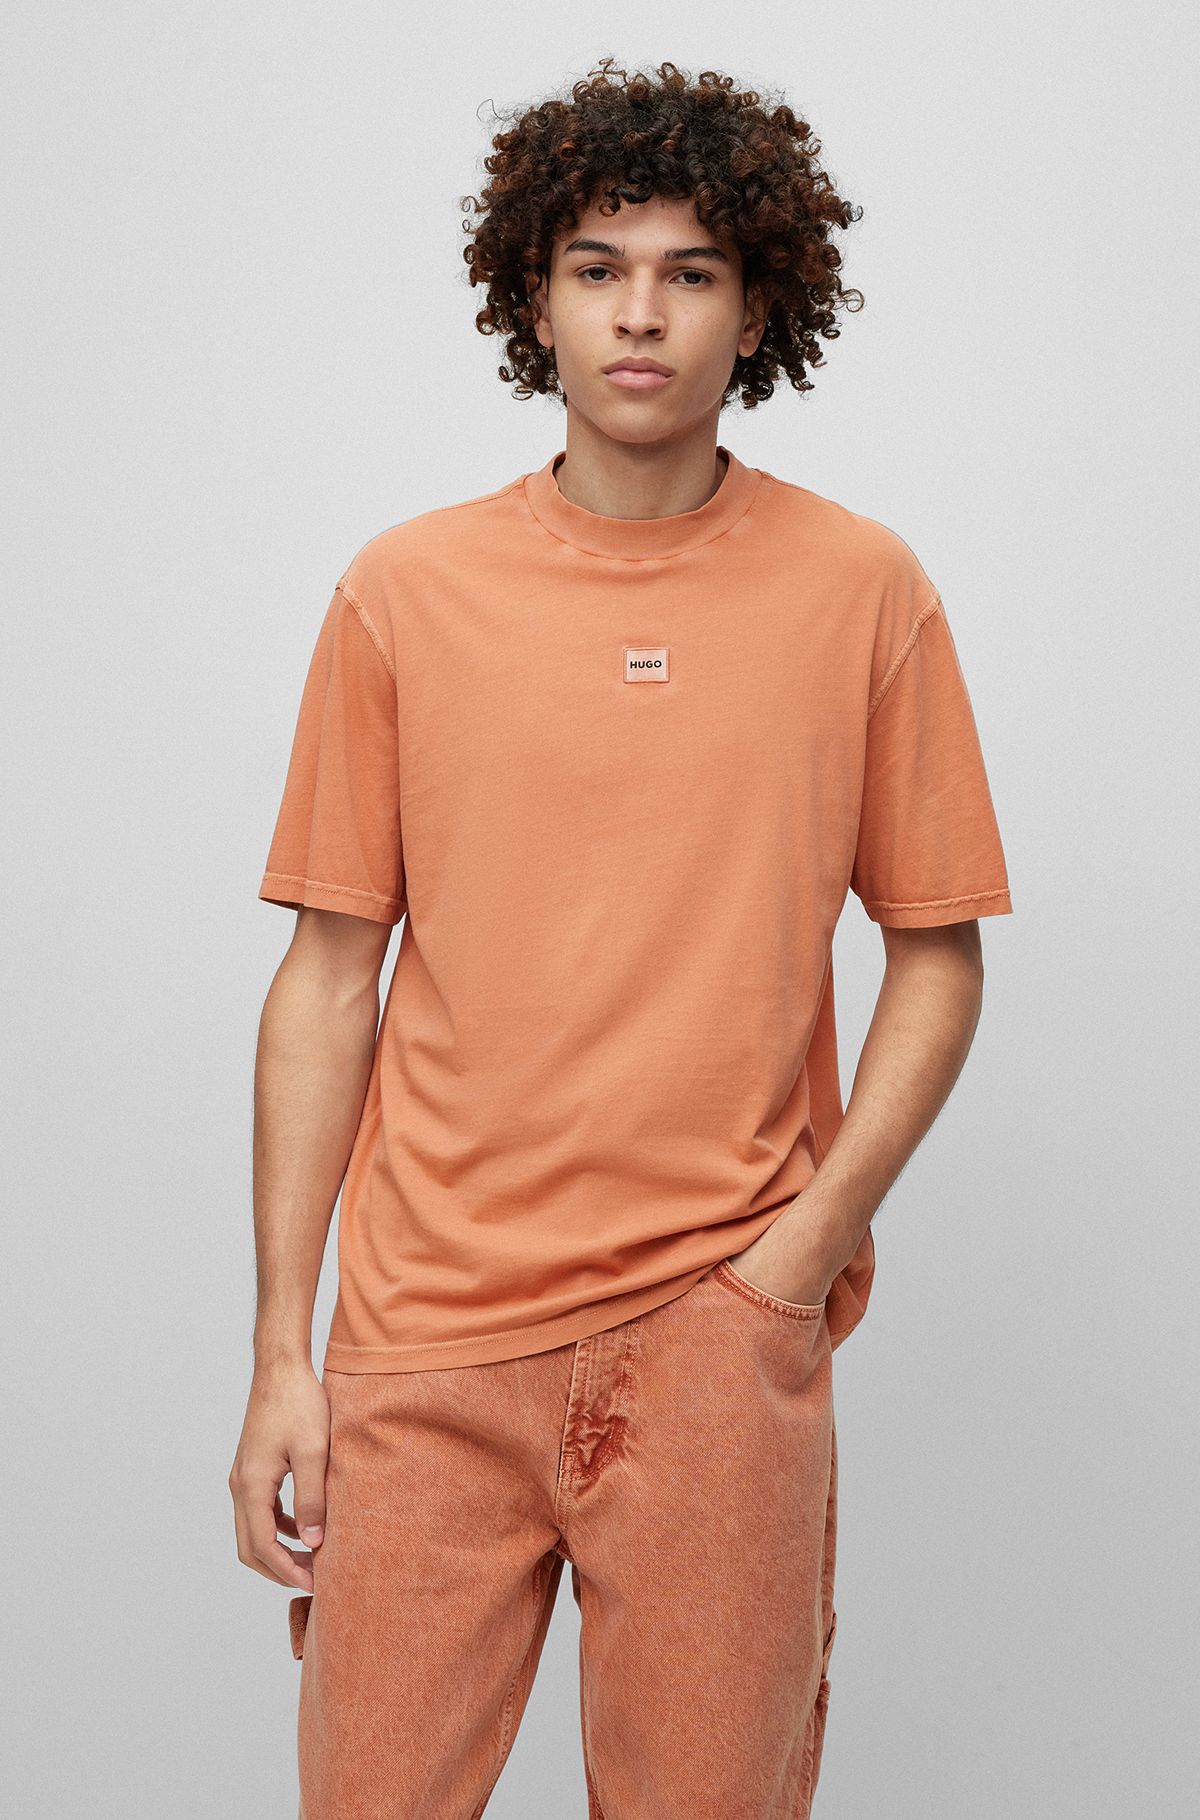 Stylish Orange T-Shirts BOSS Men | BOSS for HUGO Men by